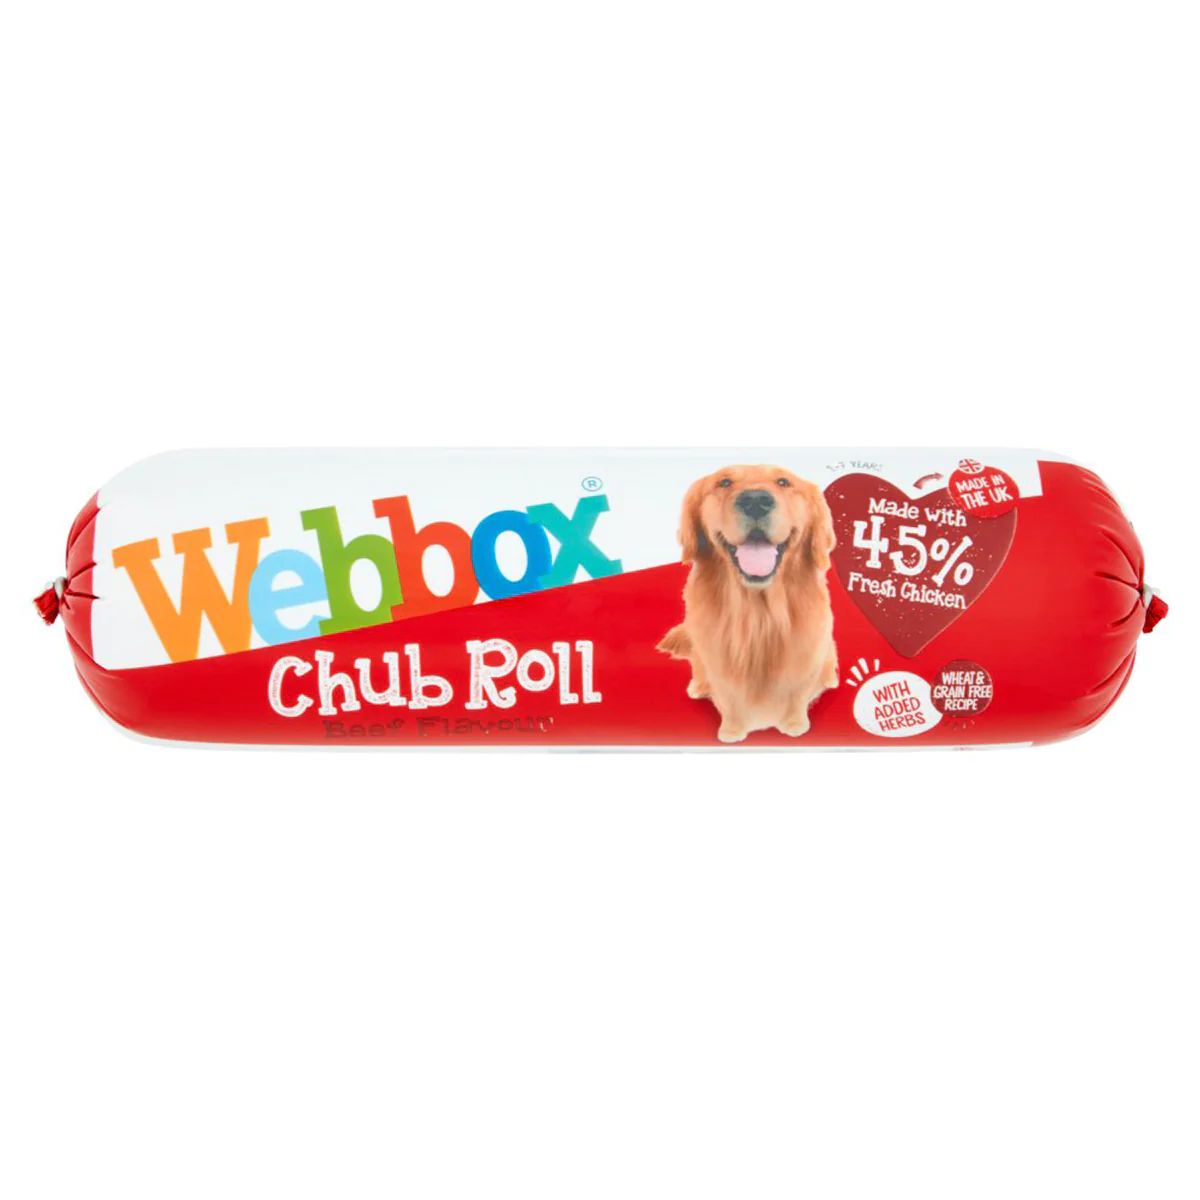 A packaged Webbox Chub Roll Beef Flavour dog food.